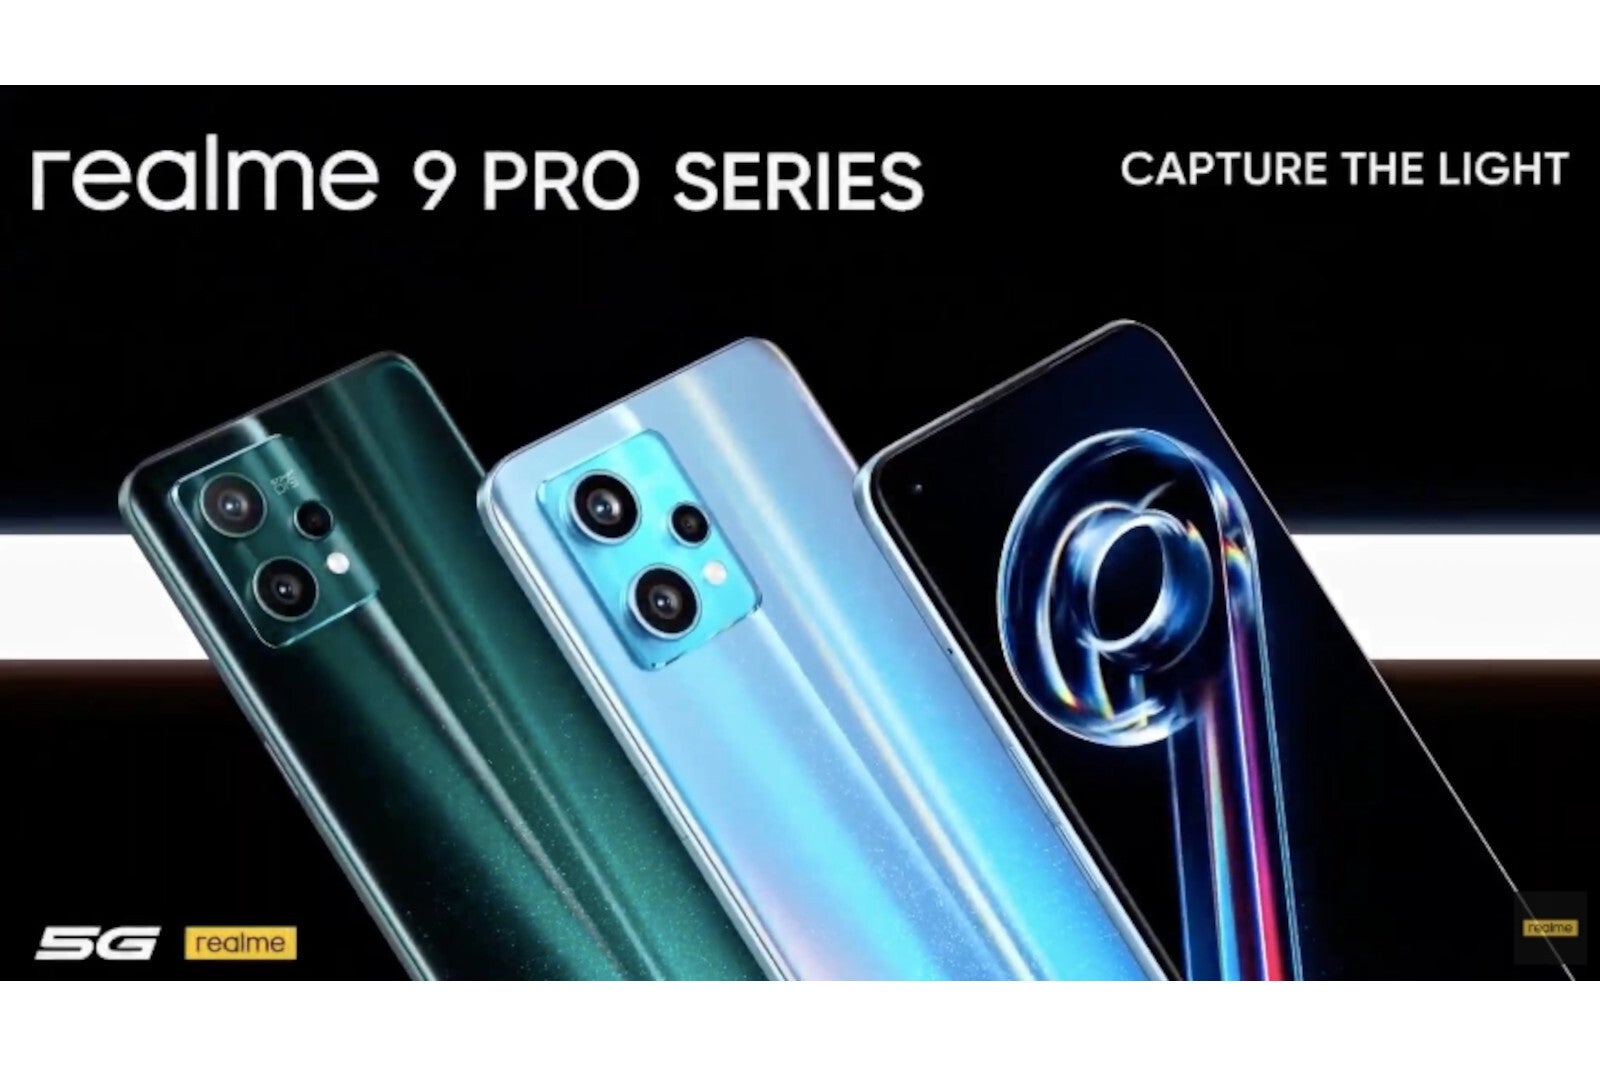 Realme 9 Pro, 9 Pro+ - Aurora Green, Sunrise Blue, Midnight Black - Realme 9 Pro, 9 Pro+ arrive with 60W charging, 120Hz display, triple camera